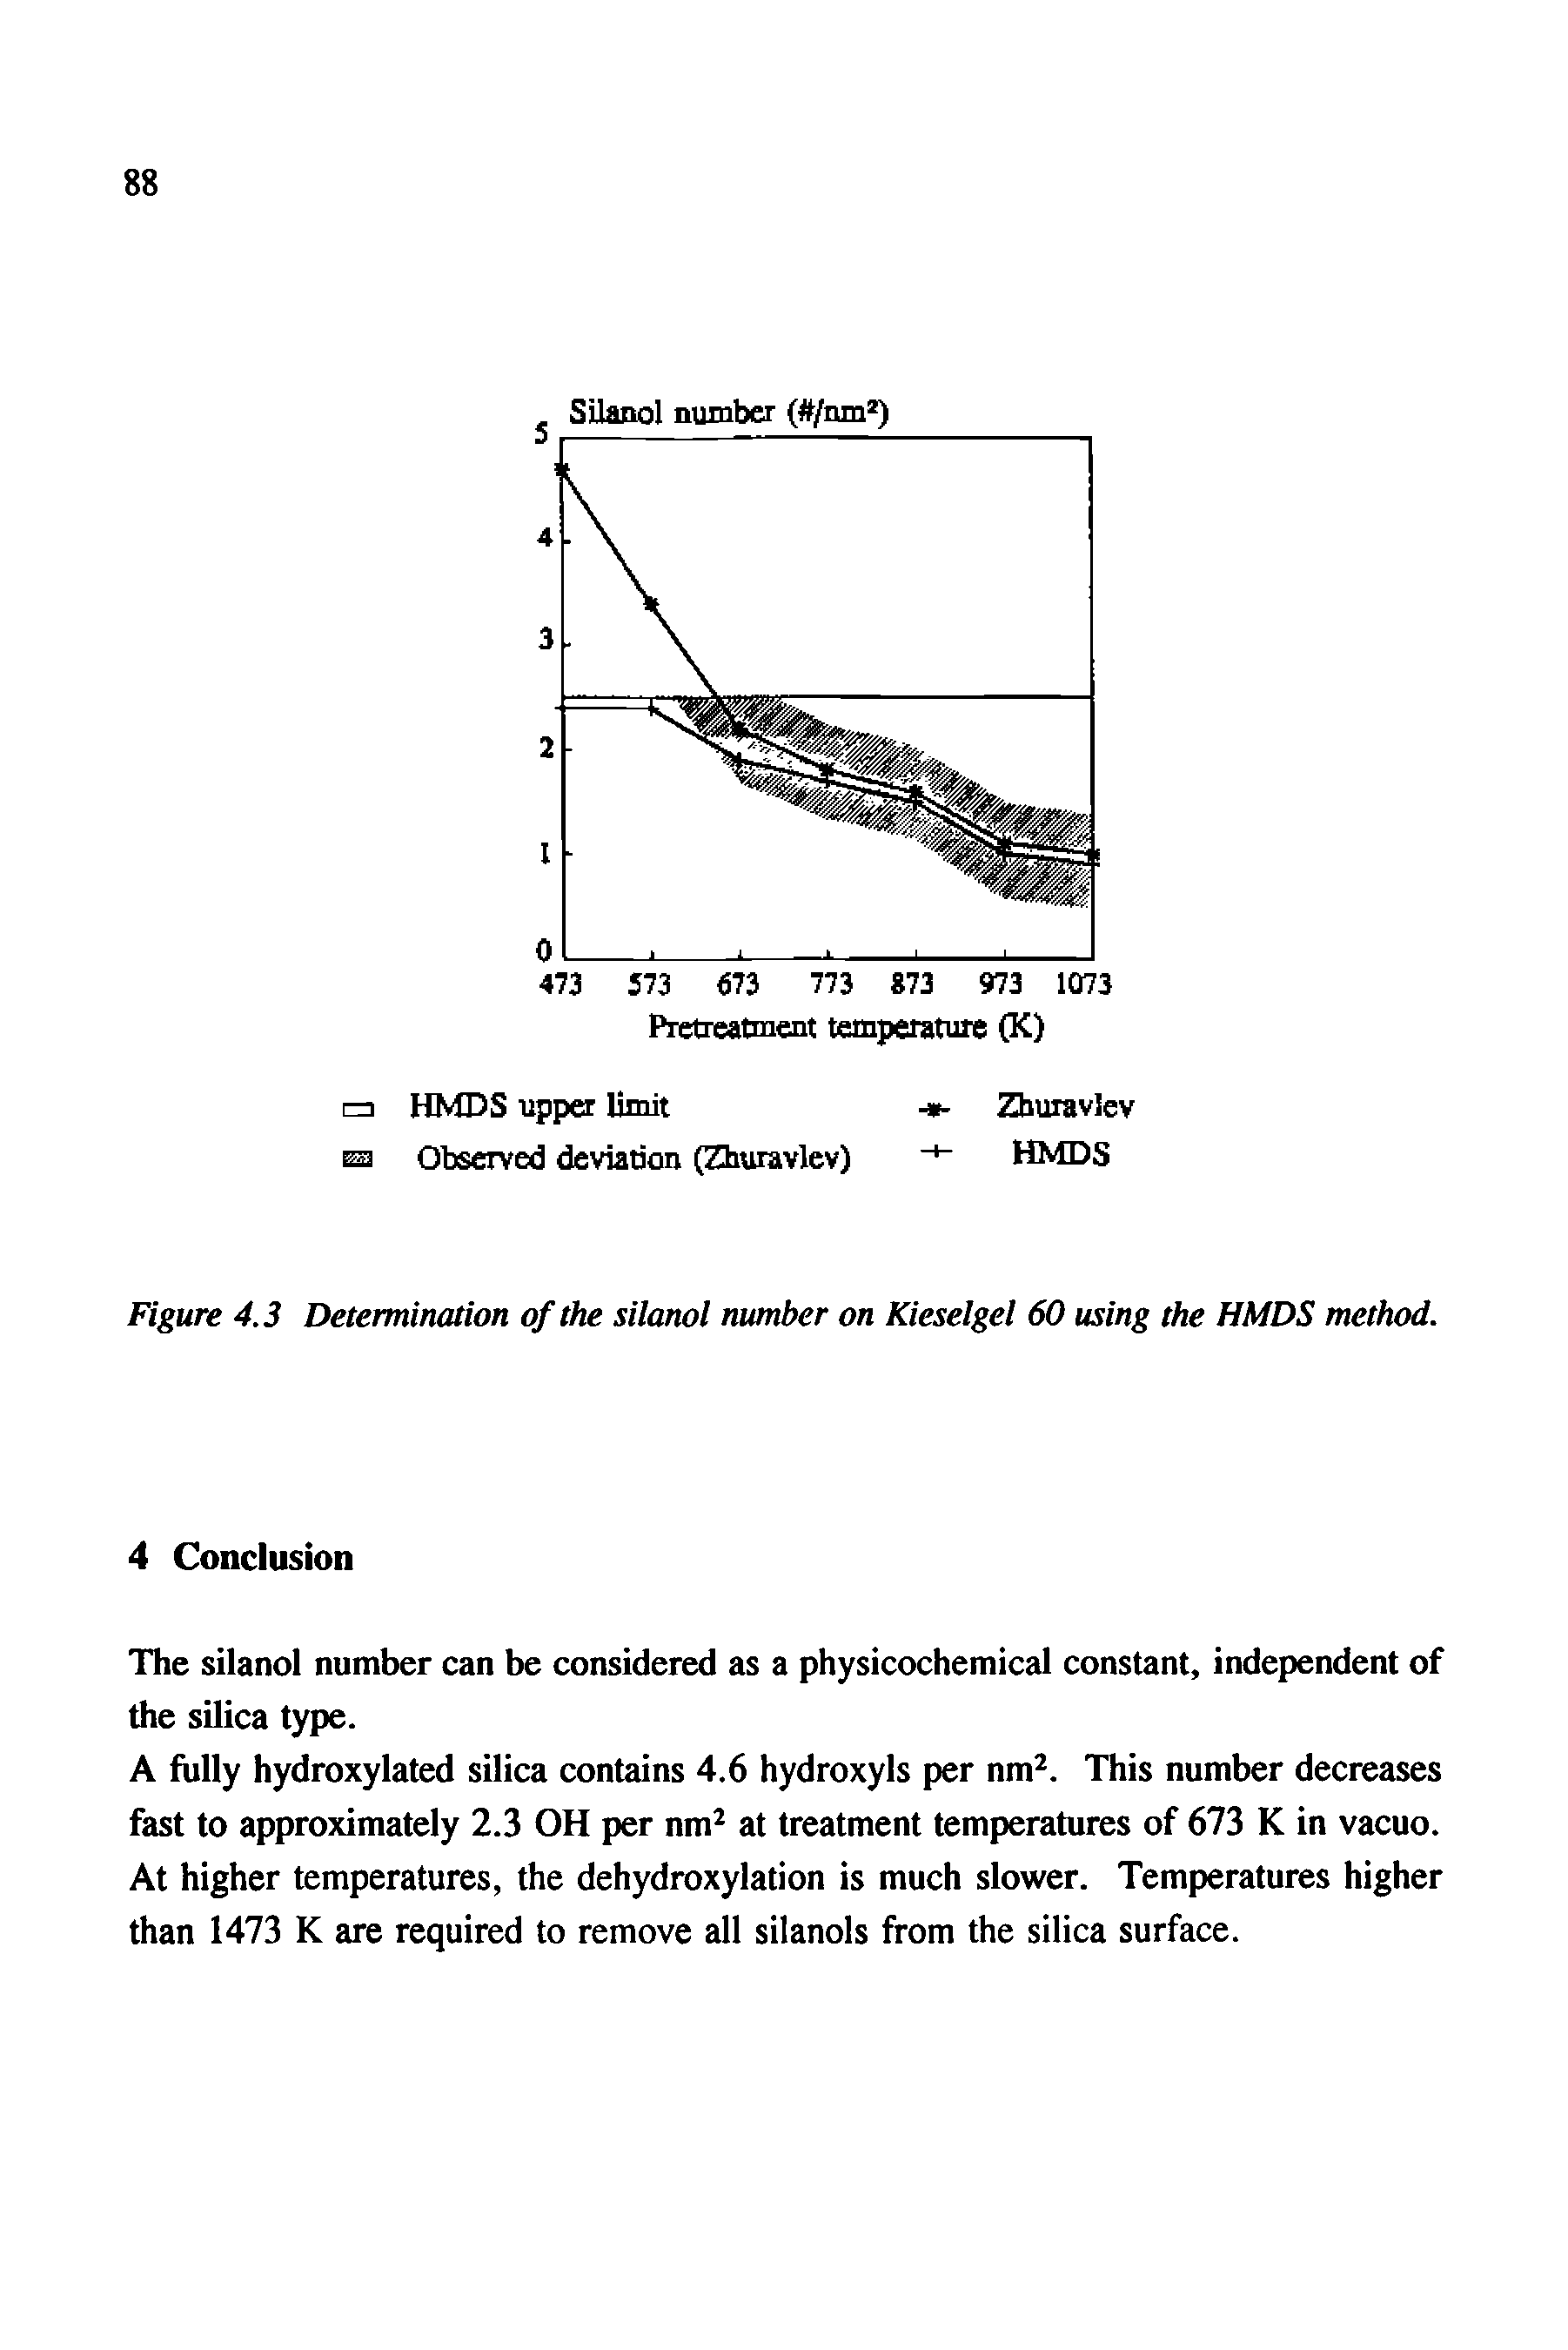 Figure 4.3 Determination of the silanol number on Kieselgel 60 using the HMDS method.